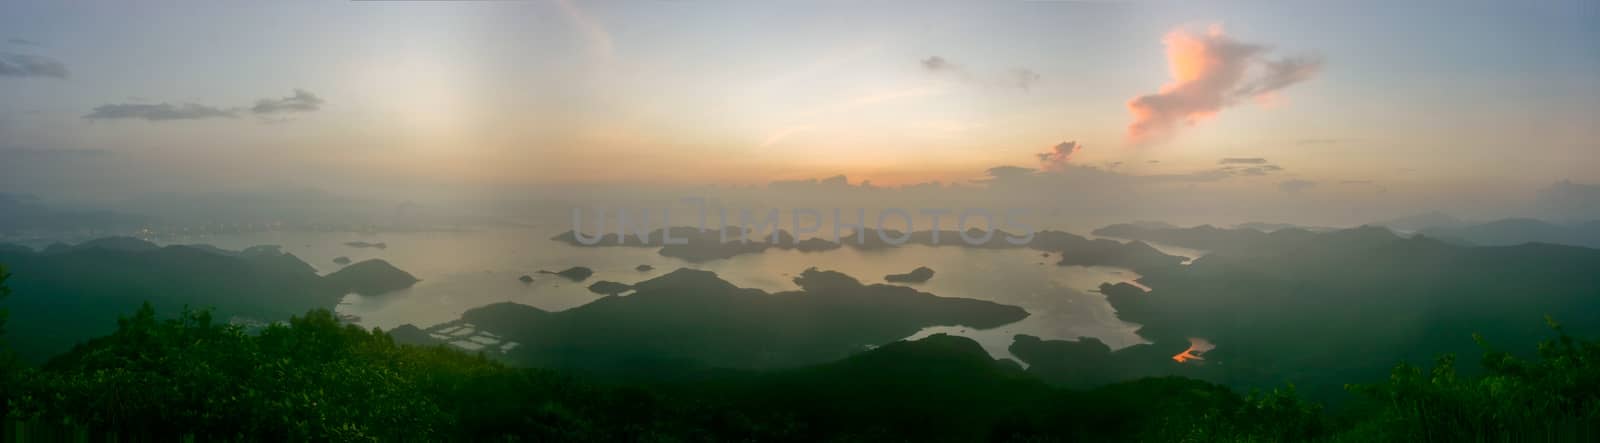 Panorama of Sunrise in Tiu Tang Lung, Hong Kong, China